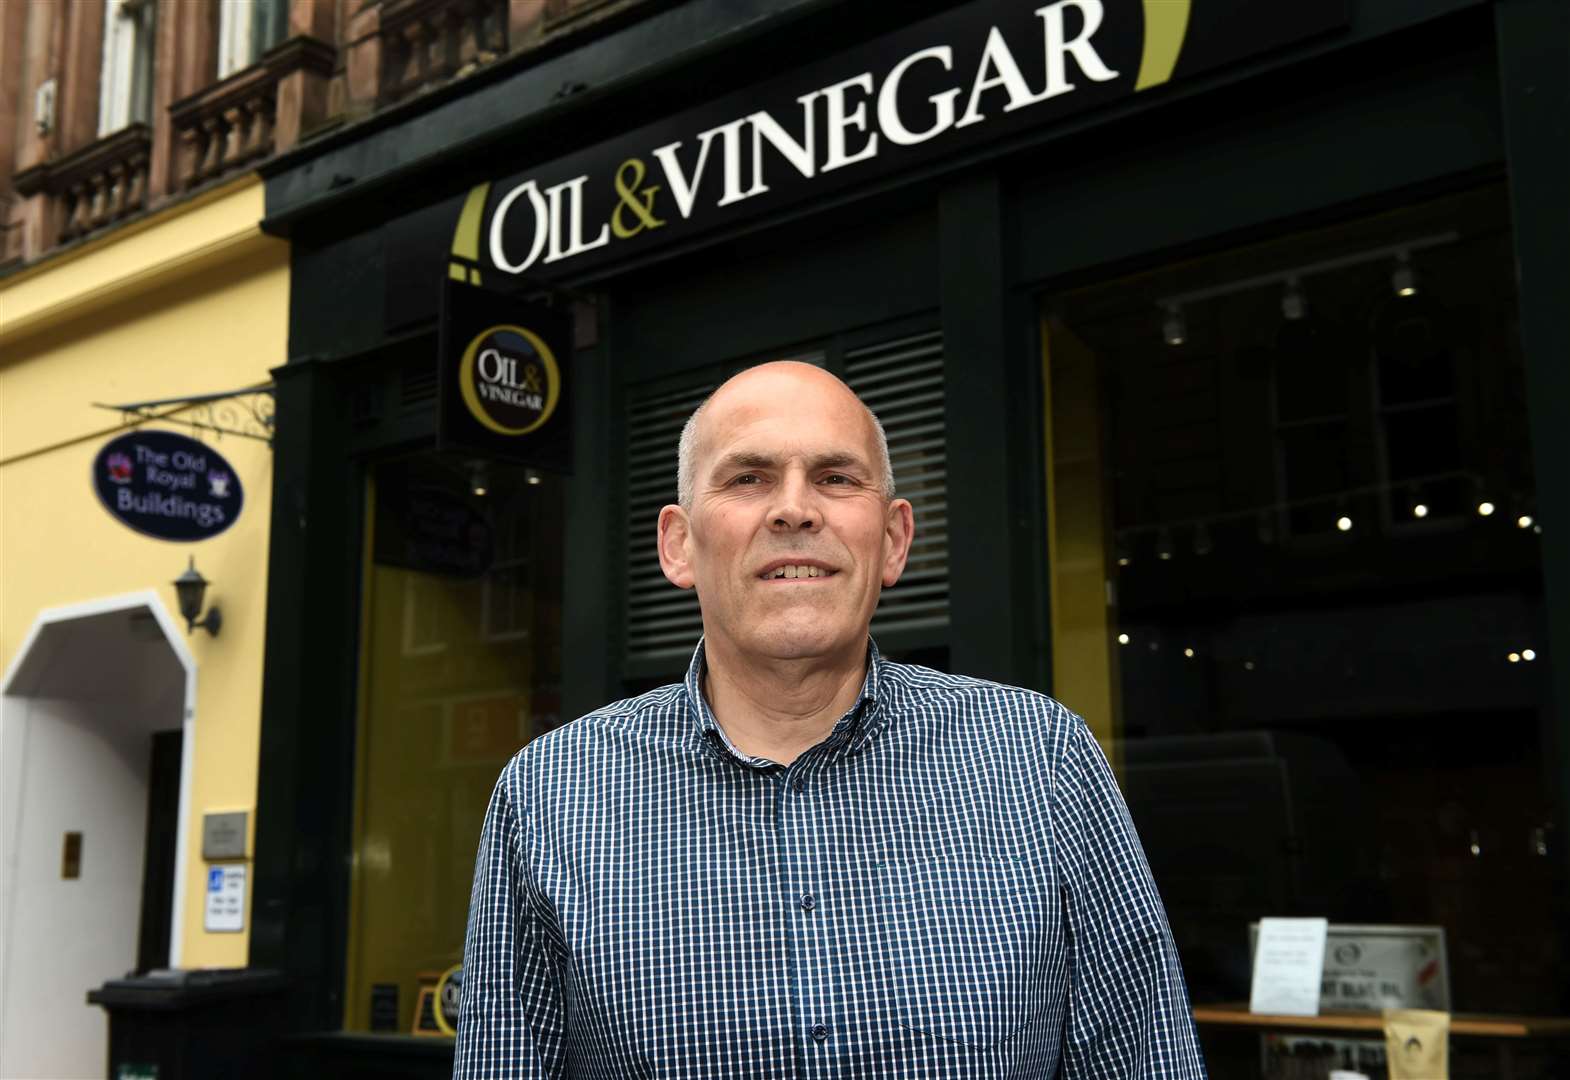 Colin Craig of Oil and Vinegar.